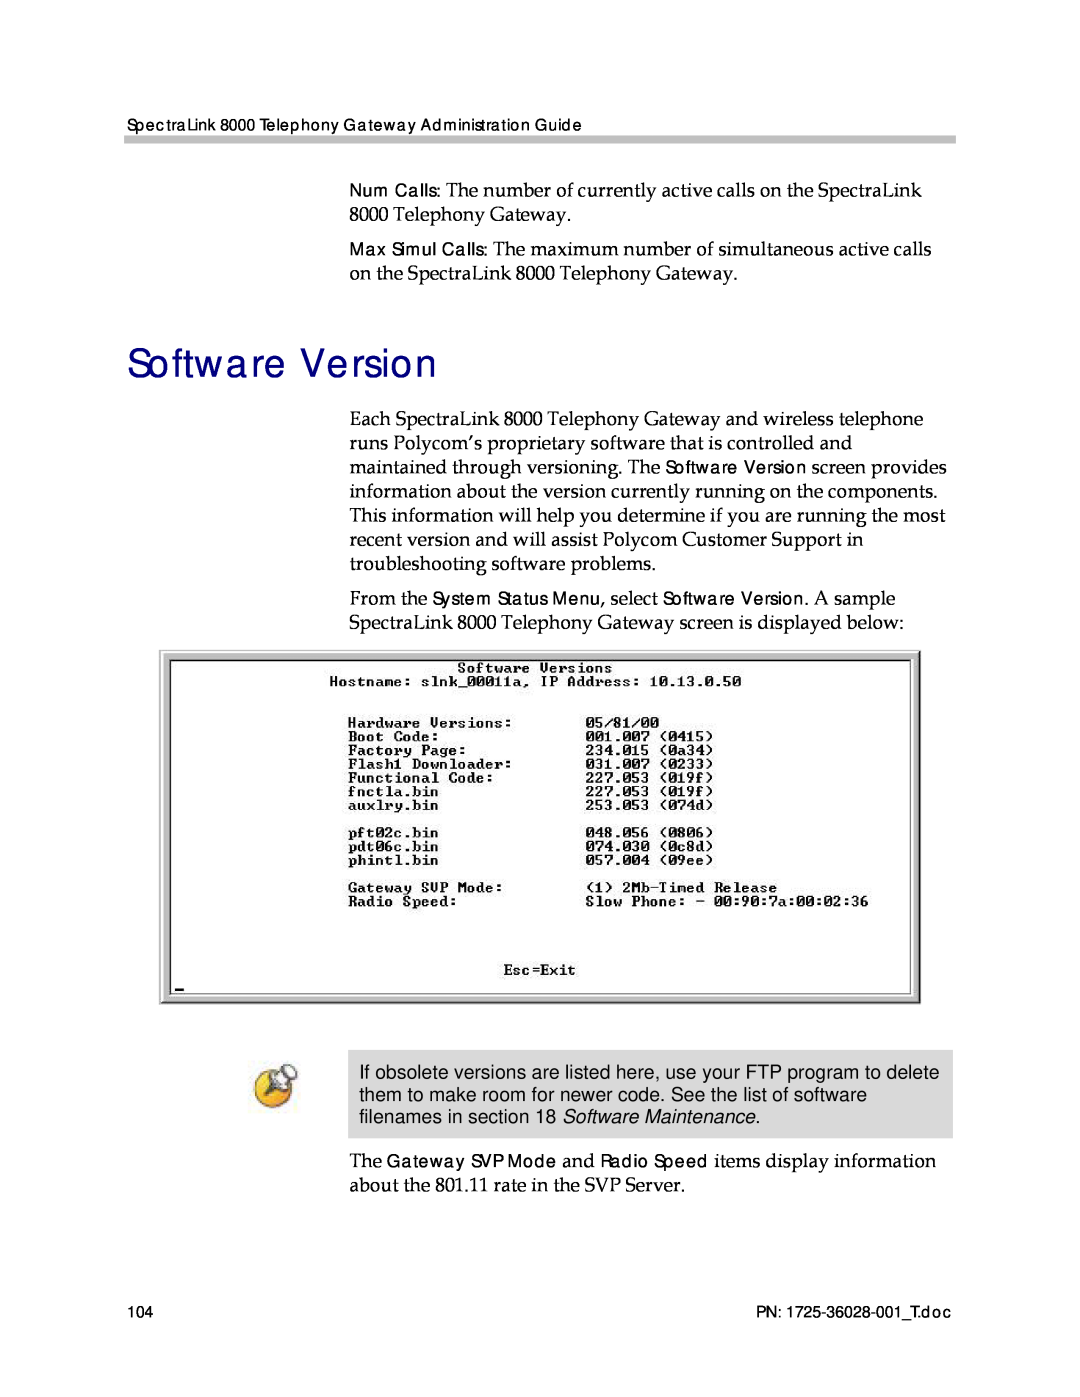 Polycom 1725-36028-001 manual Software Version 